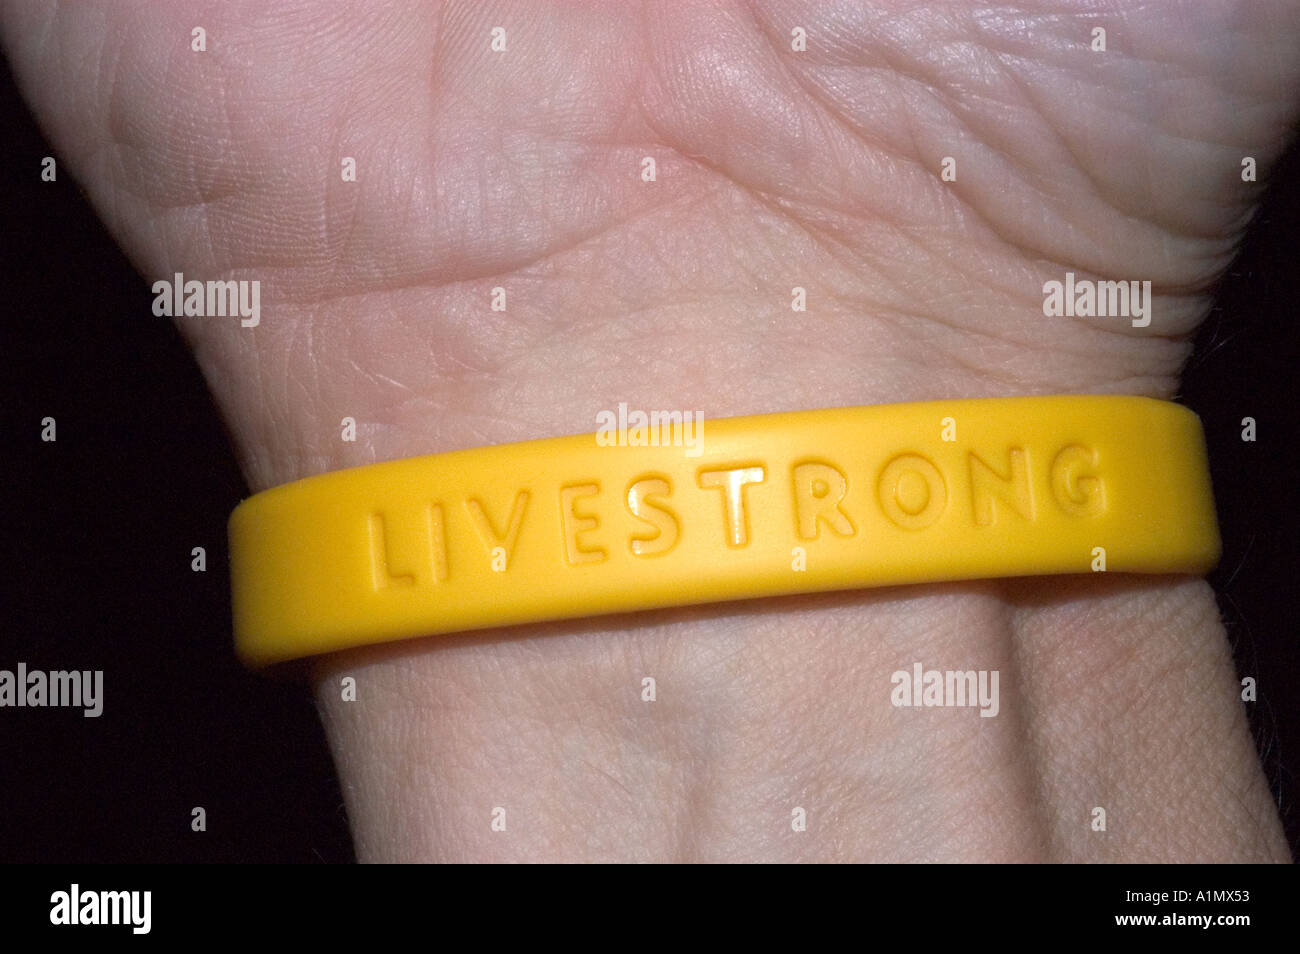 Livestrong armband Stock Photo